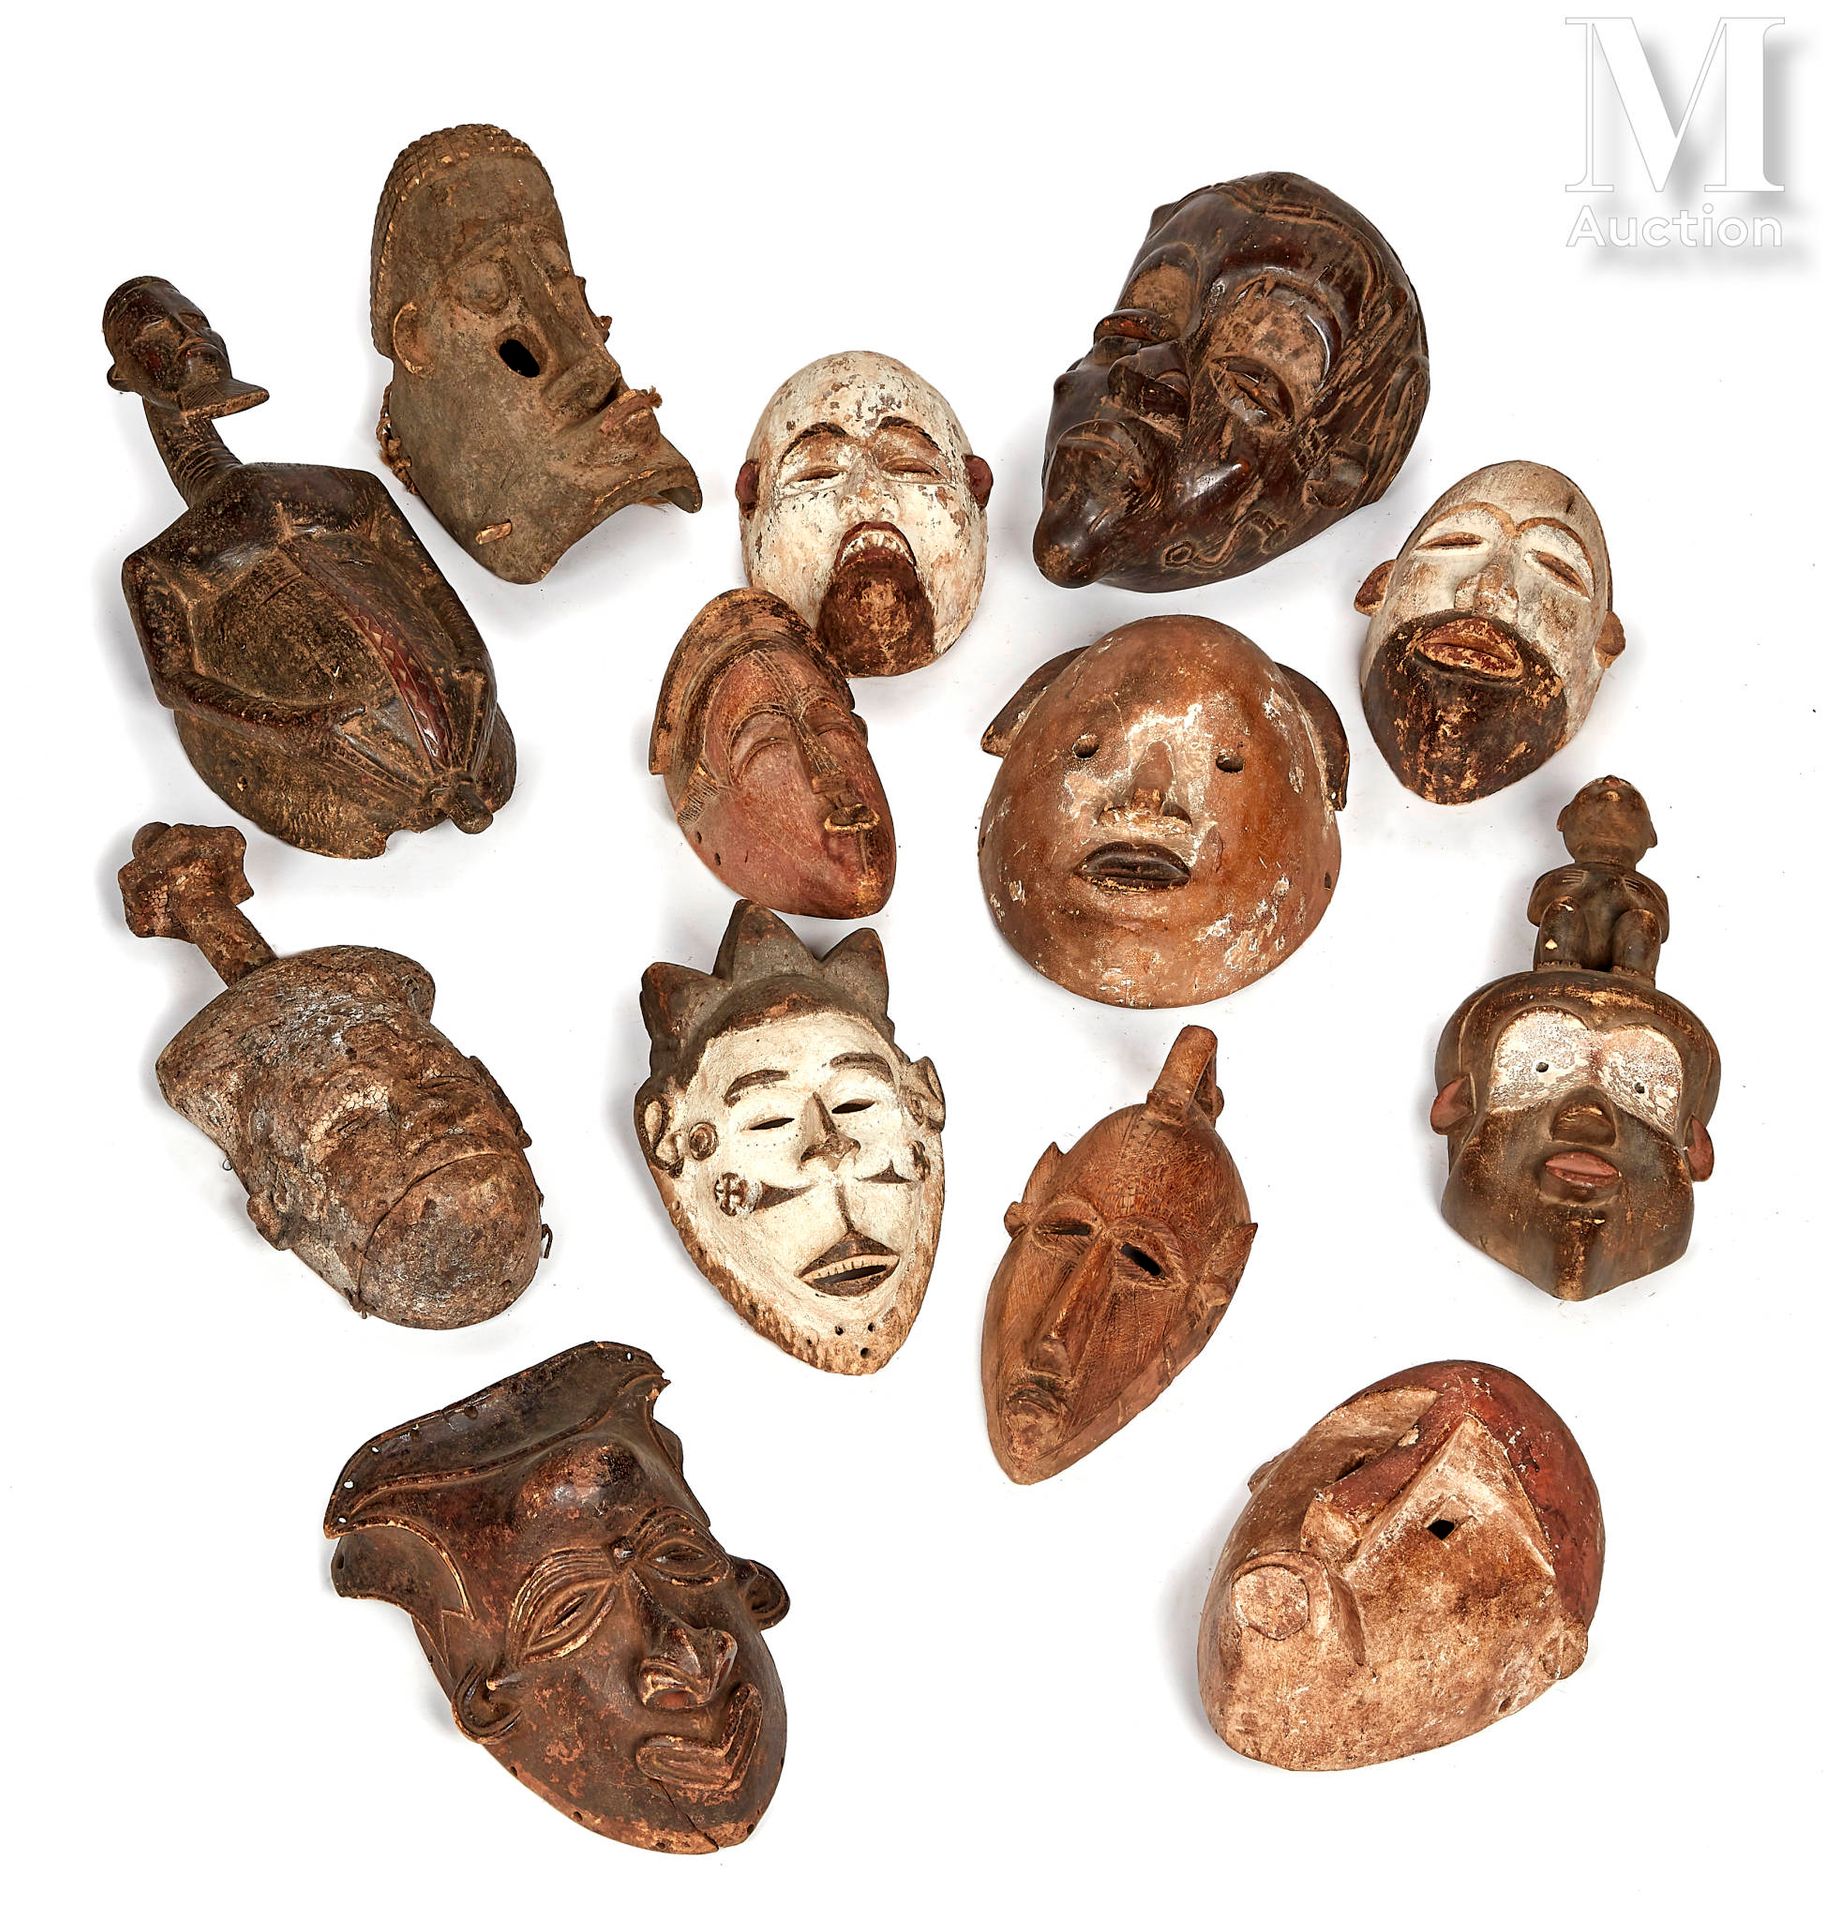 14 masques aus Holz
im Stil des angestammten Afrikas